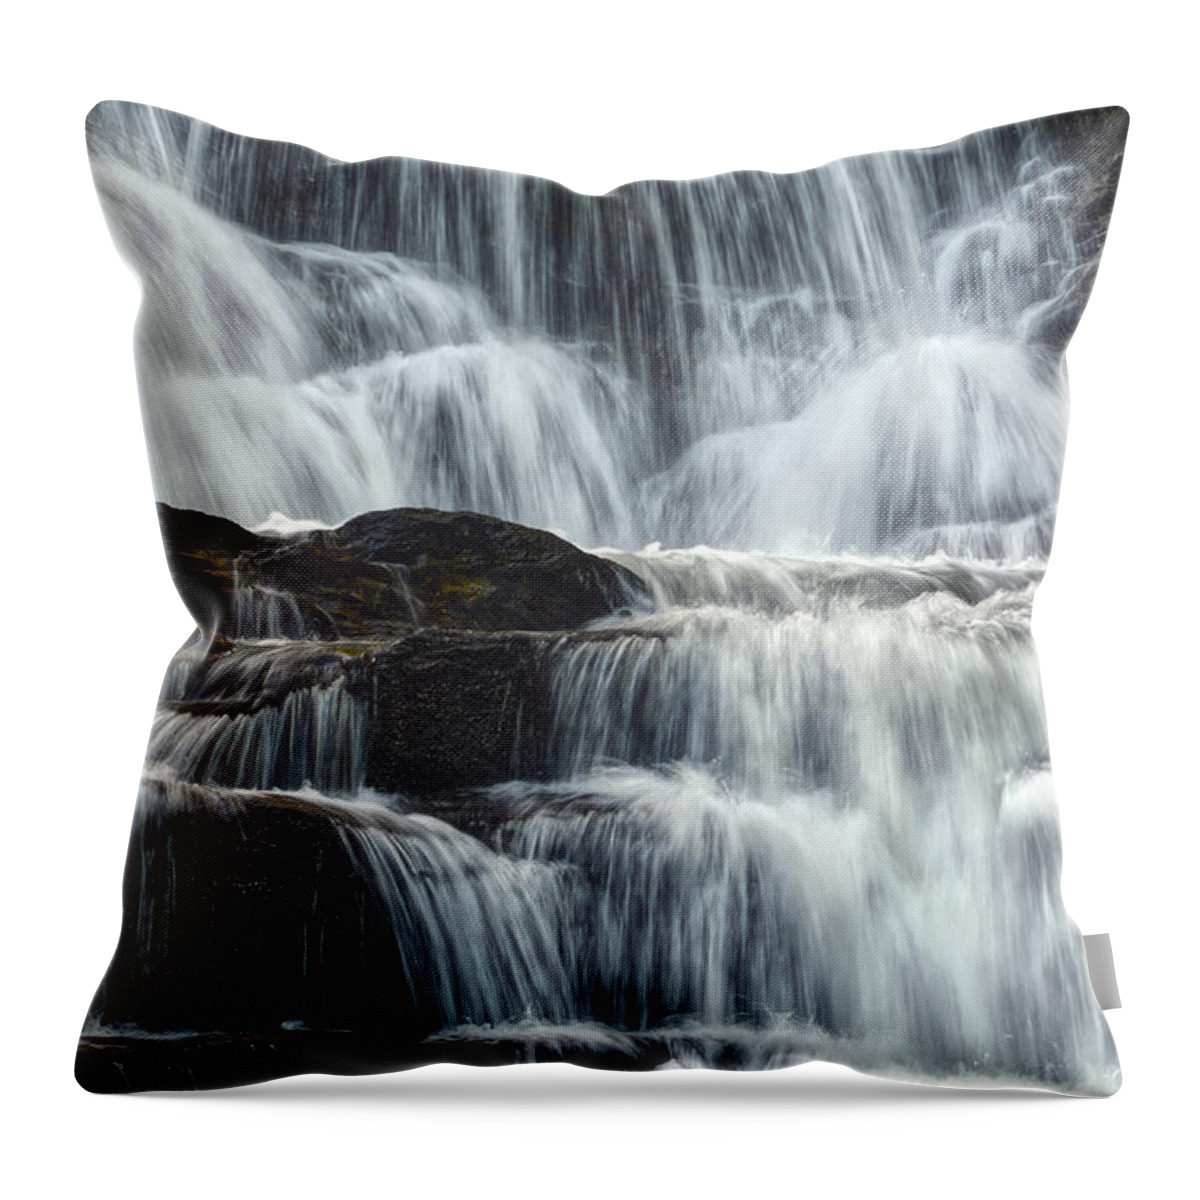 Conasauga Falls Throw Pillow featuring the photograph Conasauga Waterfall 6 by Phil Perkins